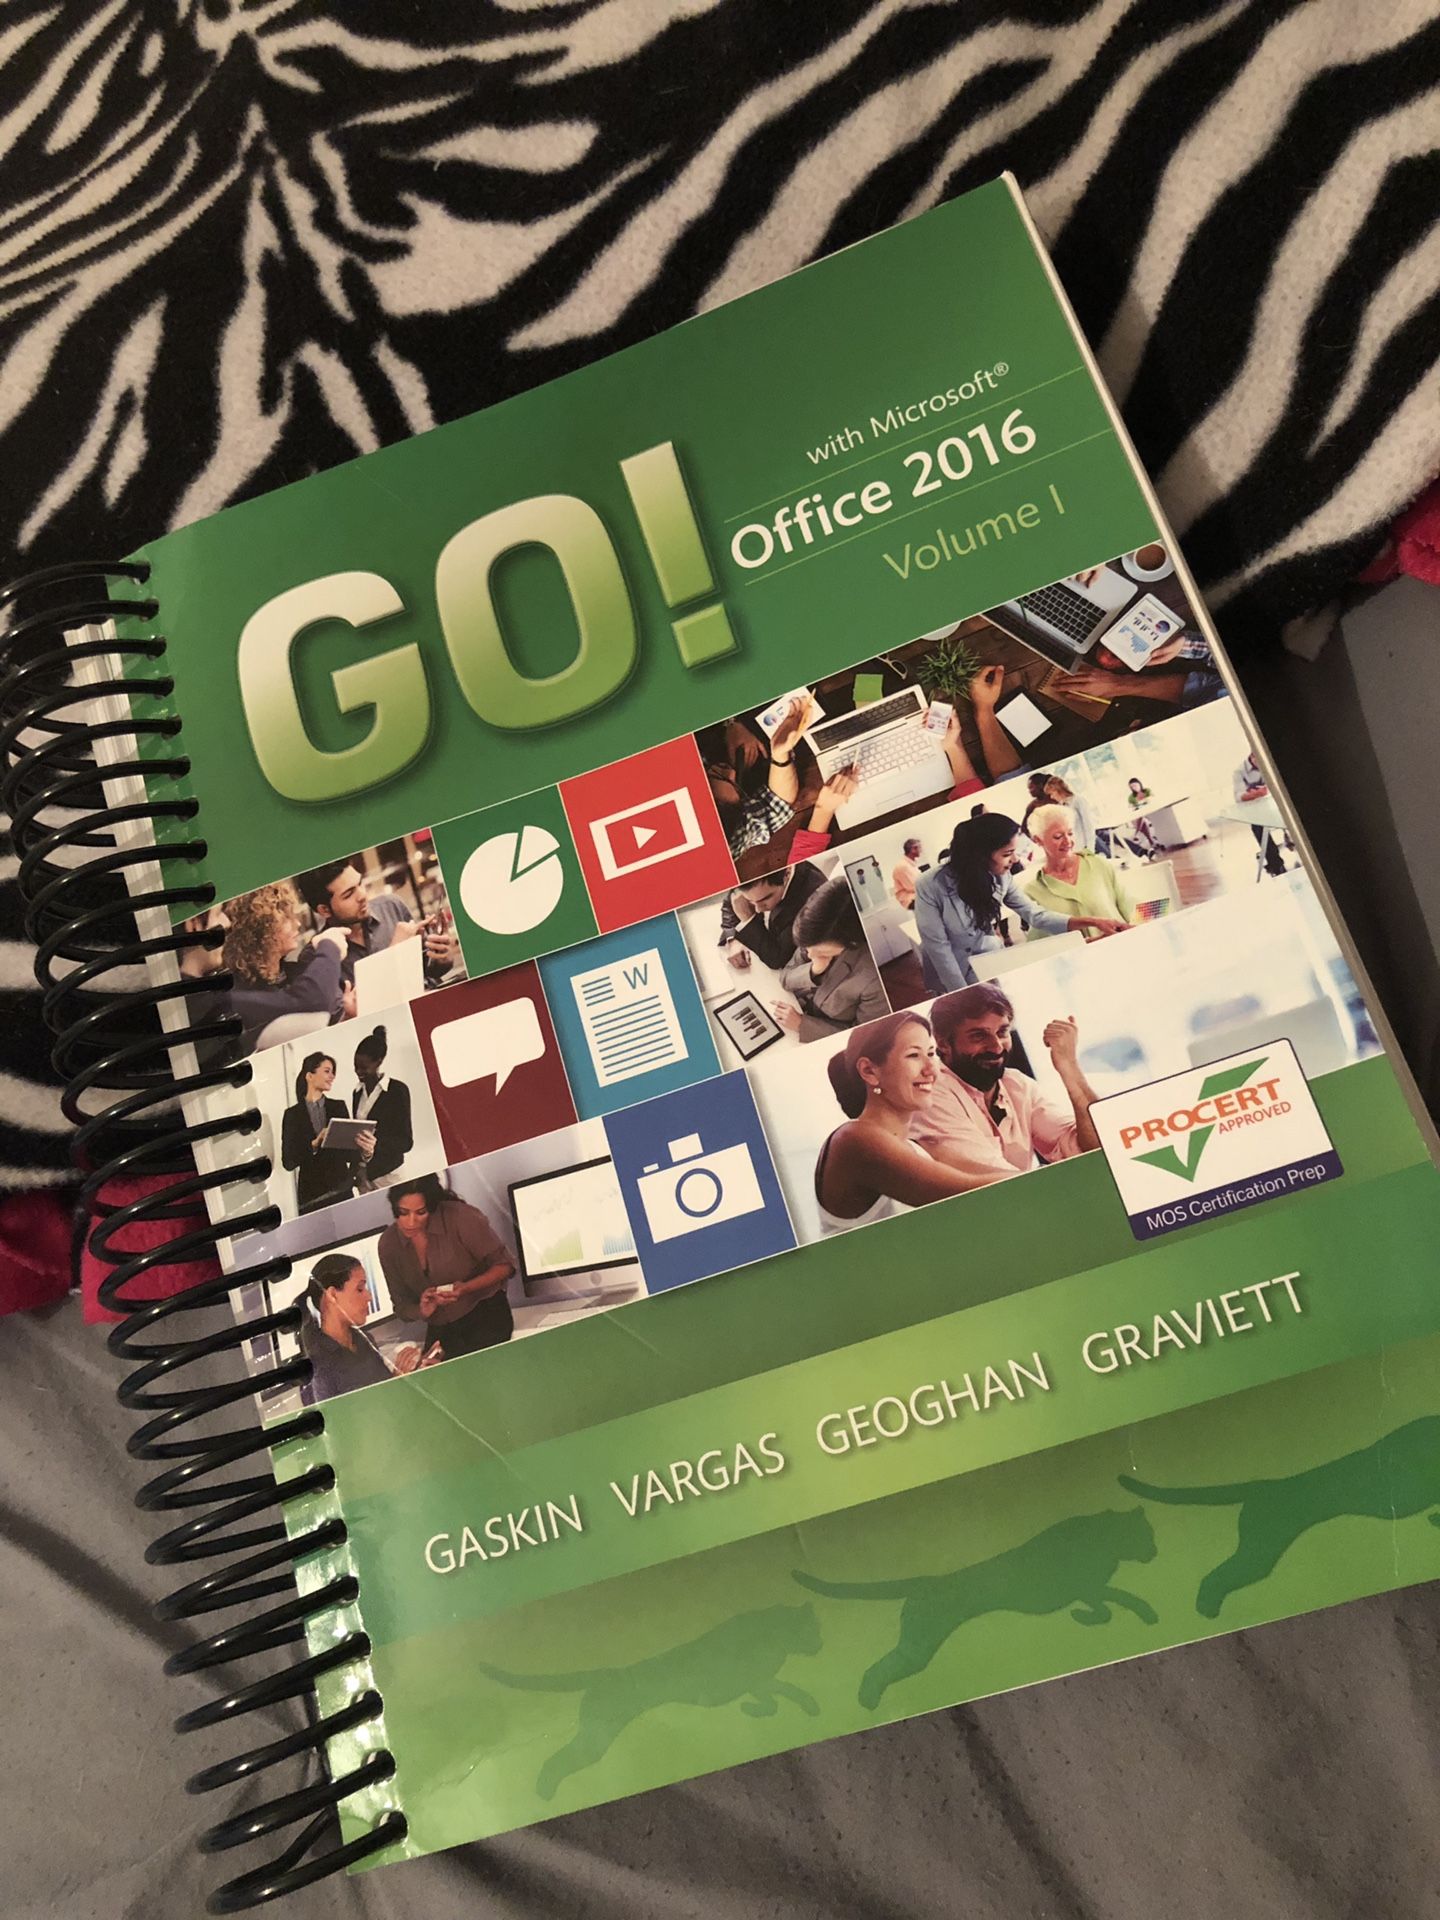 Go! Microsoft office 2016 Volume 1